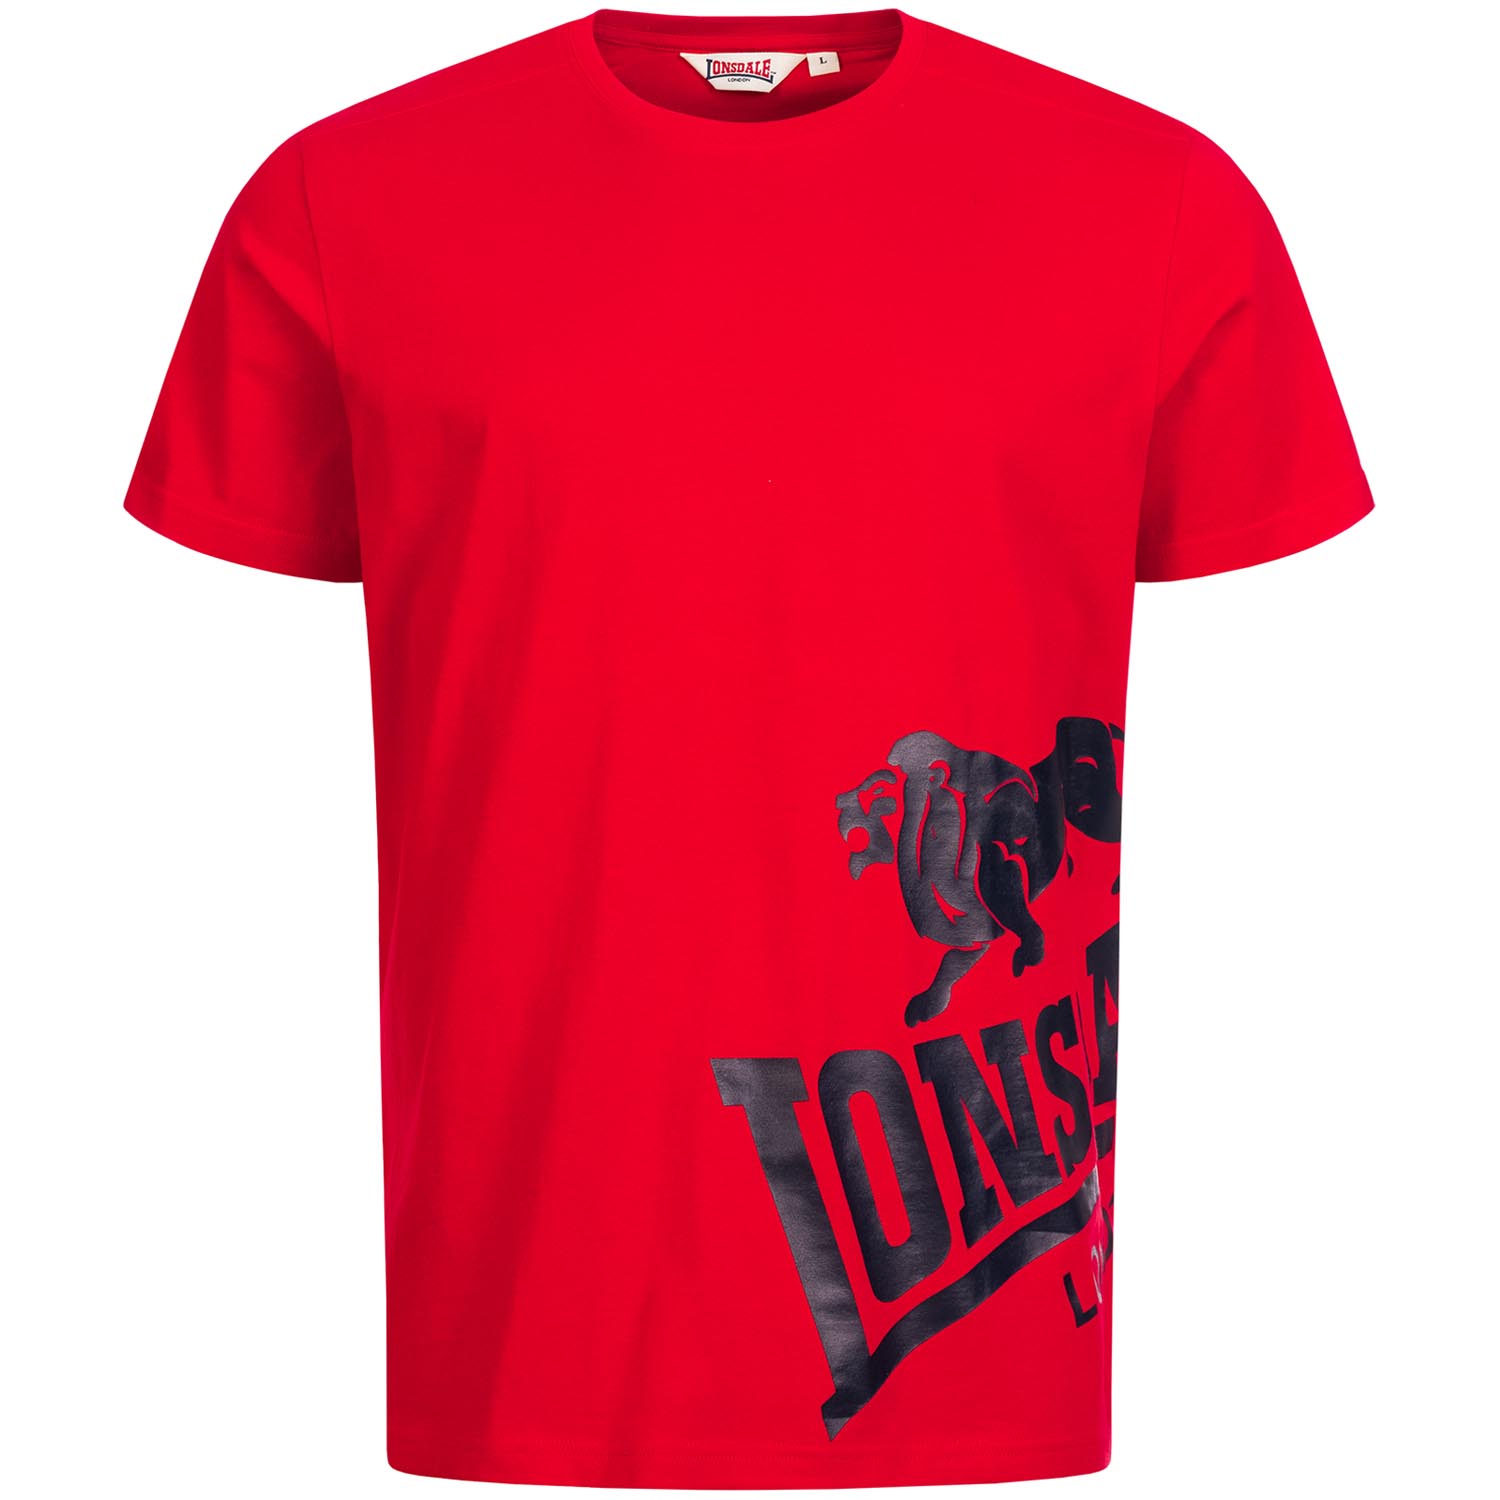 Lonsdale T-Shirt, Dereham, red, L